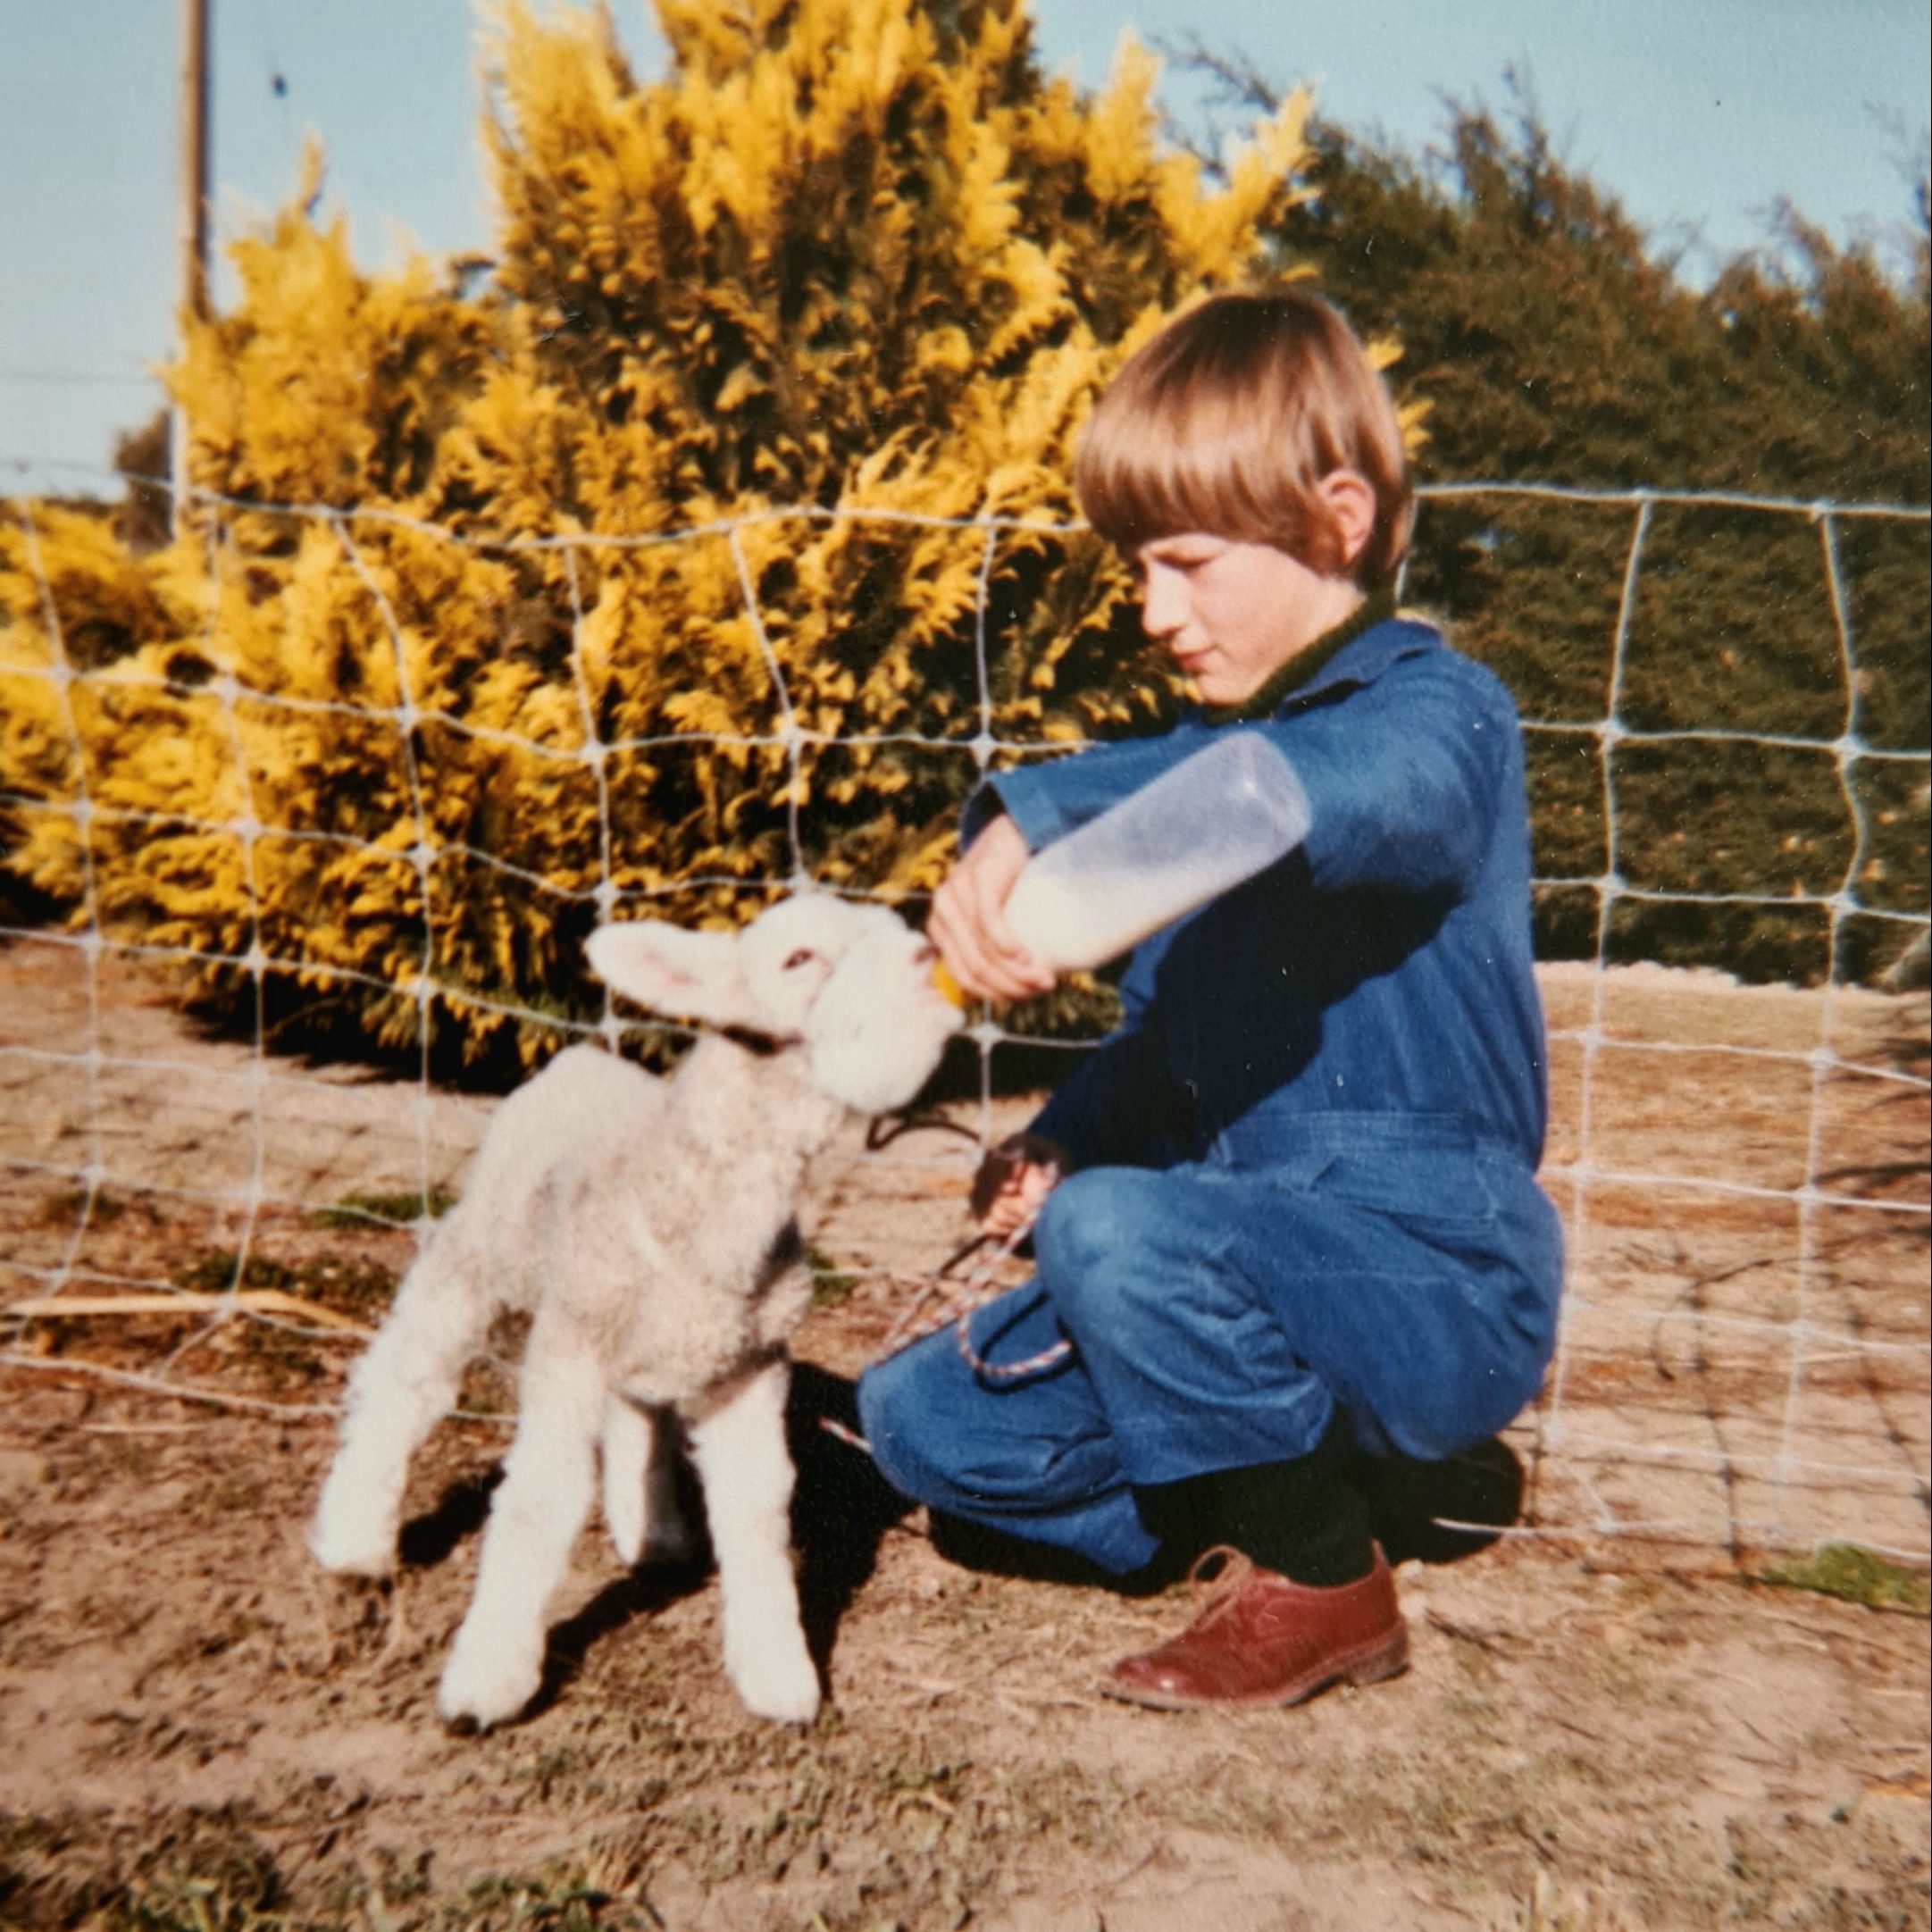 Young Sharon Earl feeding pet lamb